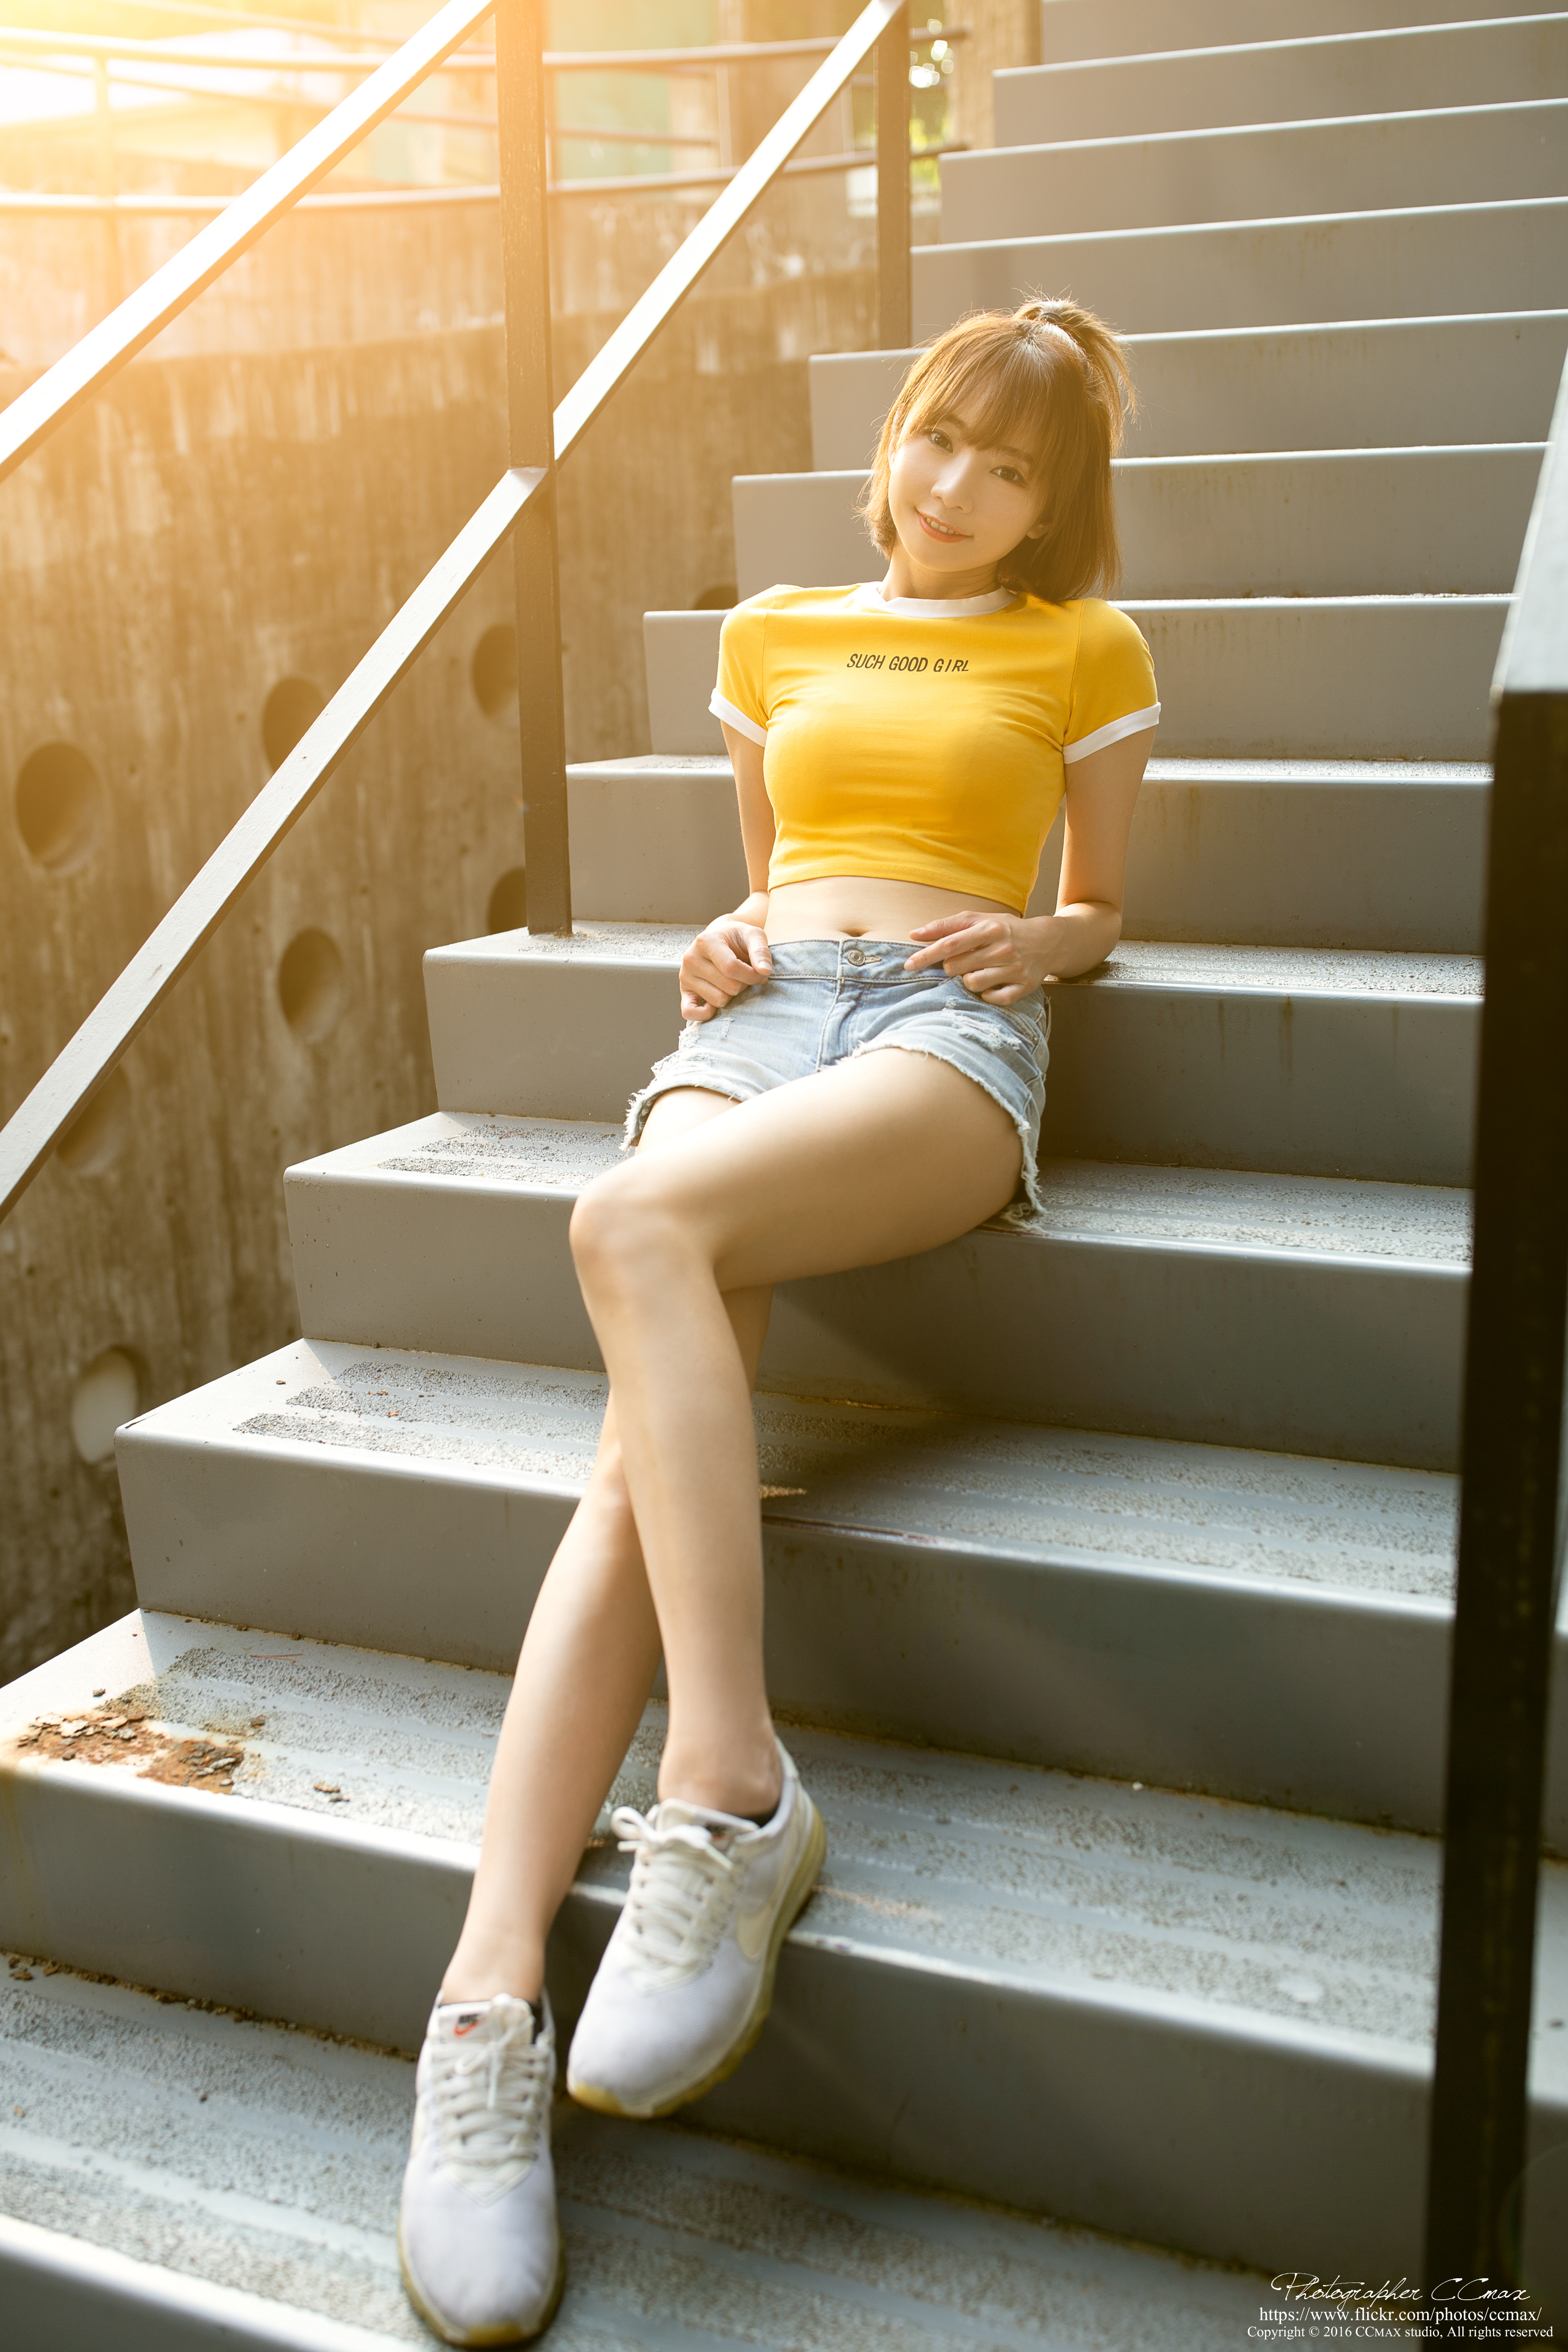 Max Chang Women Asian Stairs Sunlight Yellow Clothing Legs Crop Top Jean Shorts 3295x4942